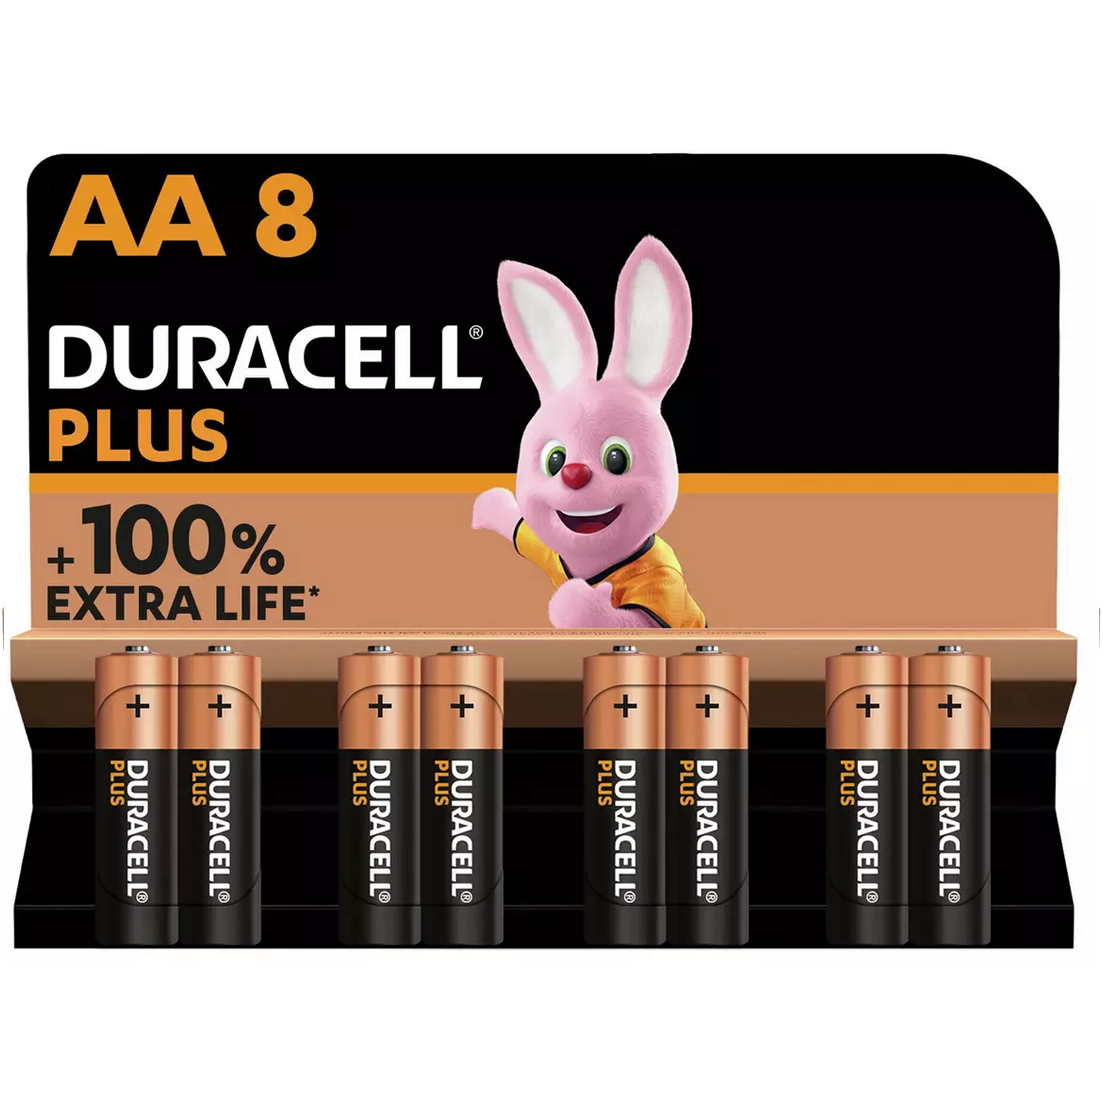 Duracell 100% Power - AA8